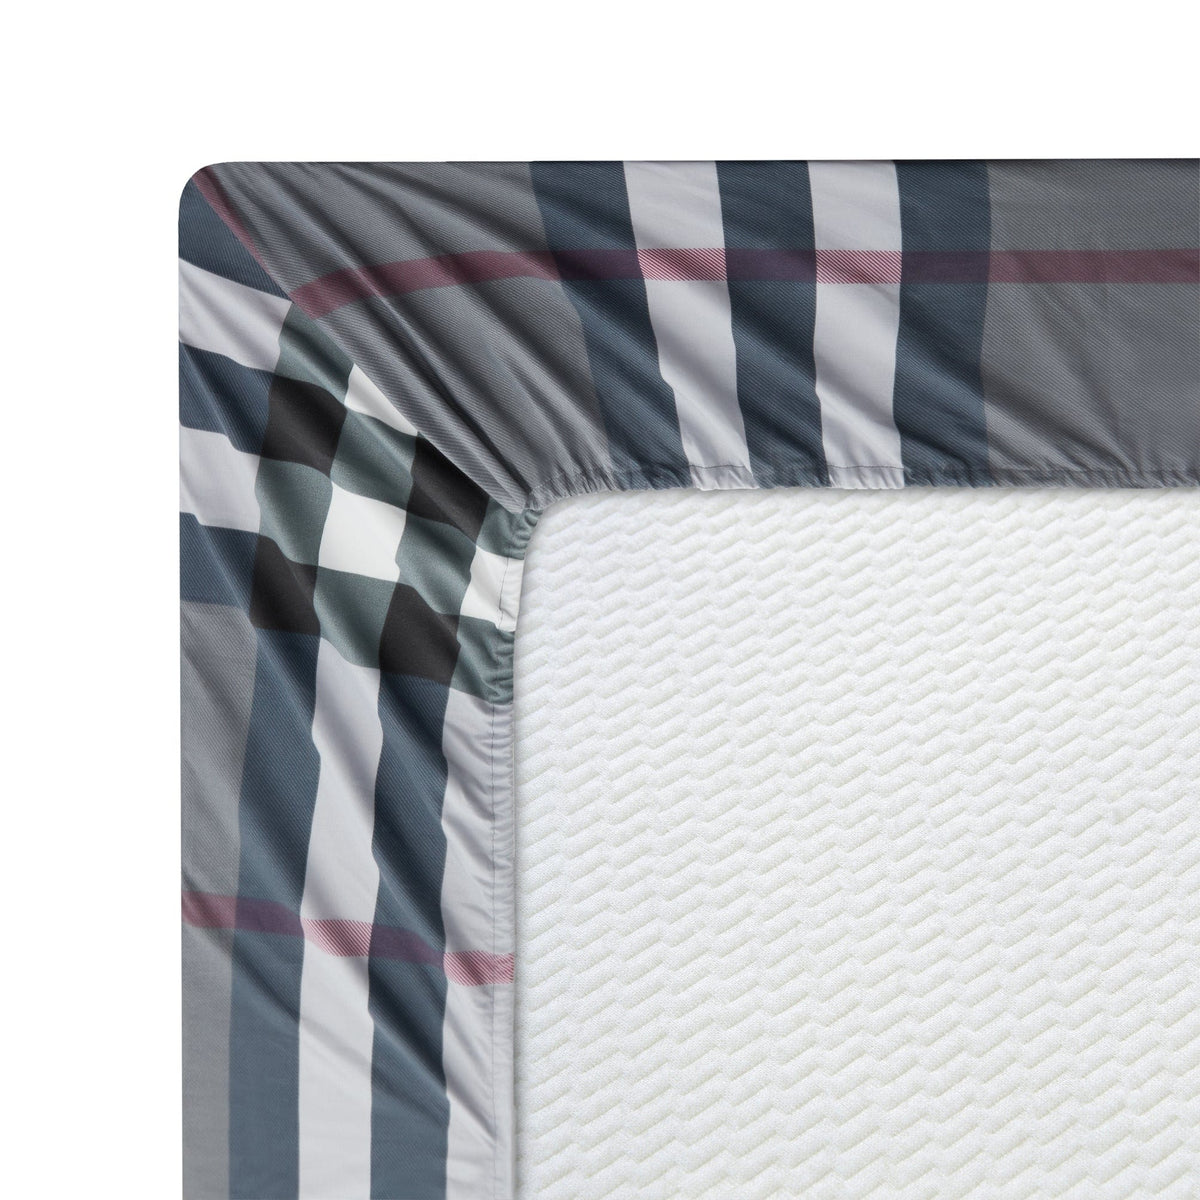 Ultra Soft Silky Deep Pocket Rich Printed Bedding Rayon from Bamboo All Season Sheet Set, Modern Grey Tartan Pattern